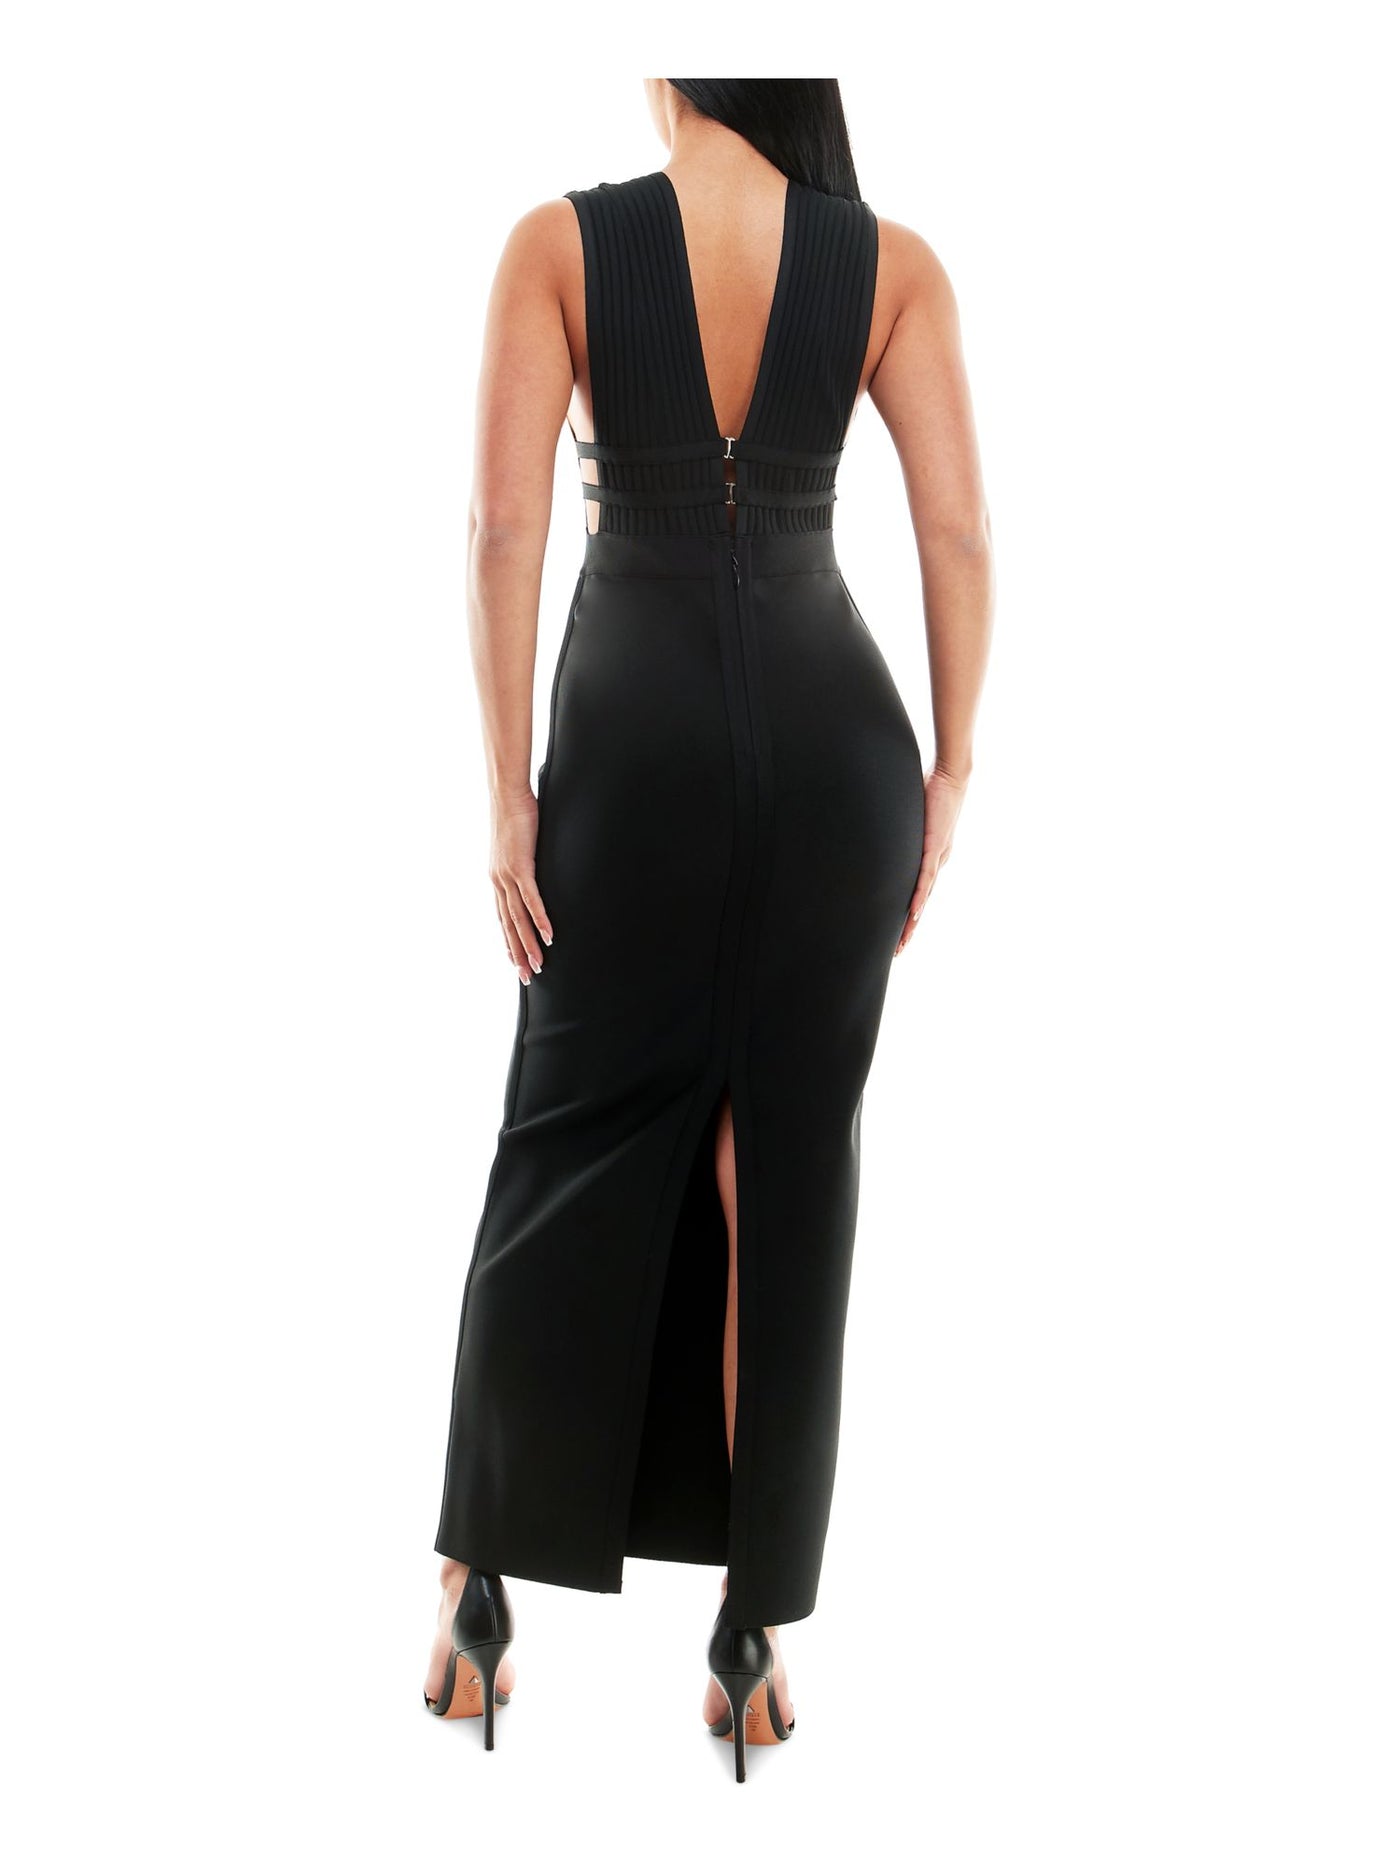 BEBE Womens Black Zippered Slitted Cage-detail Ribbed-bodice Sleeveless V Neck Full-Length Evening Gown Dress S